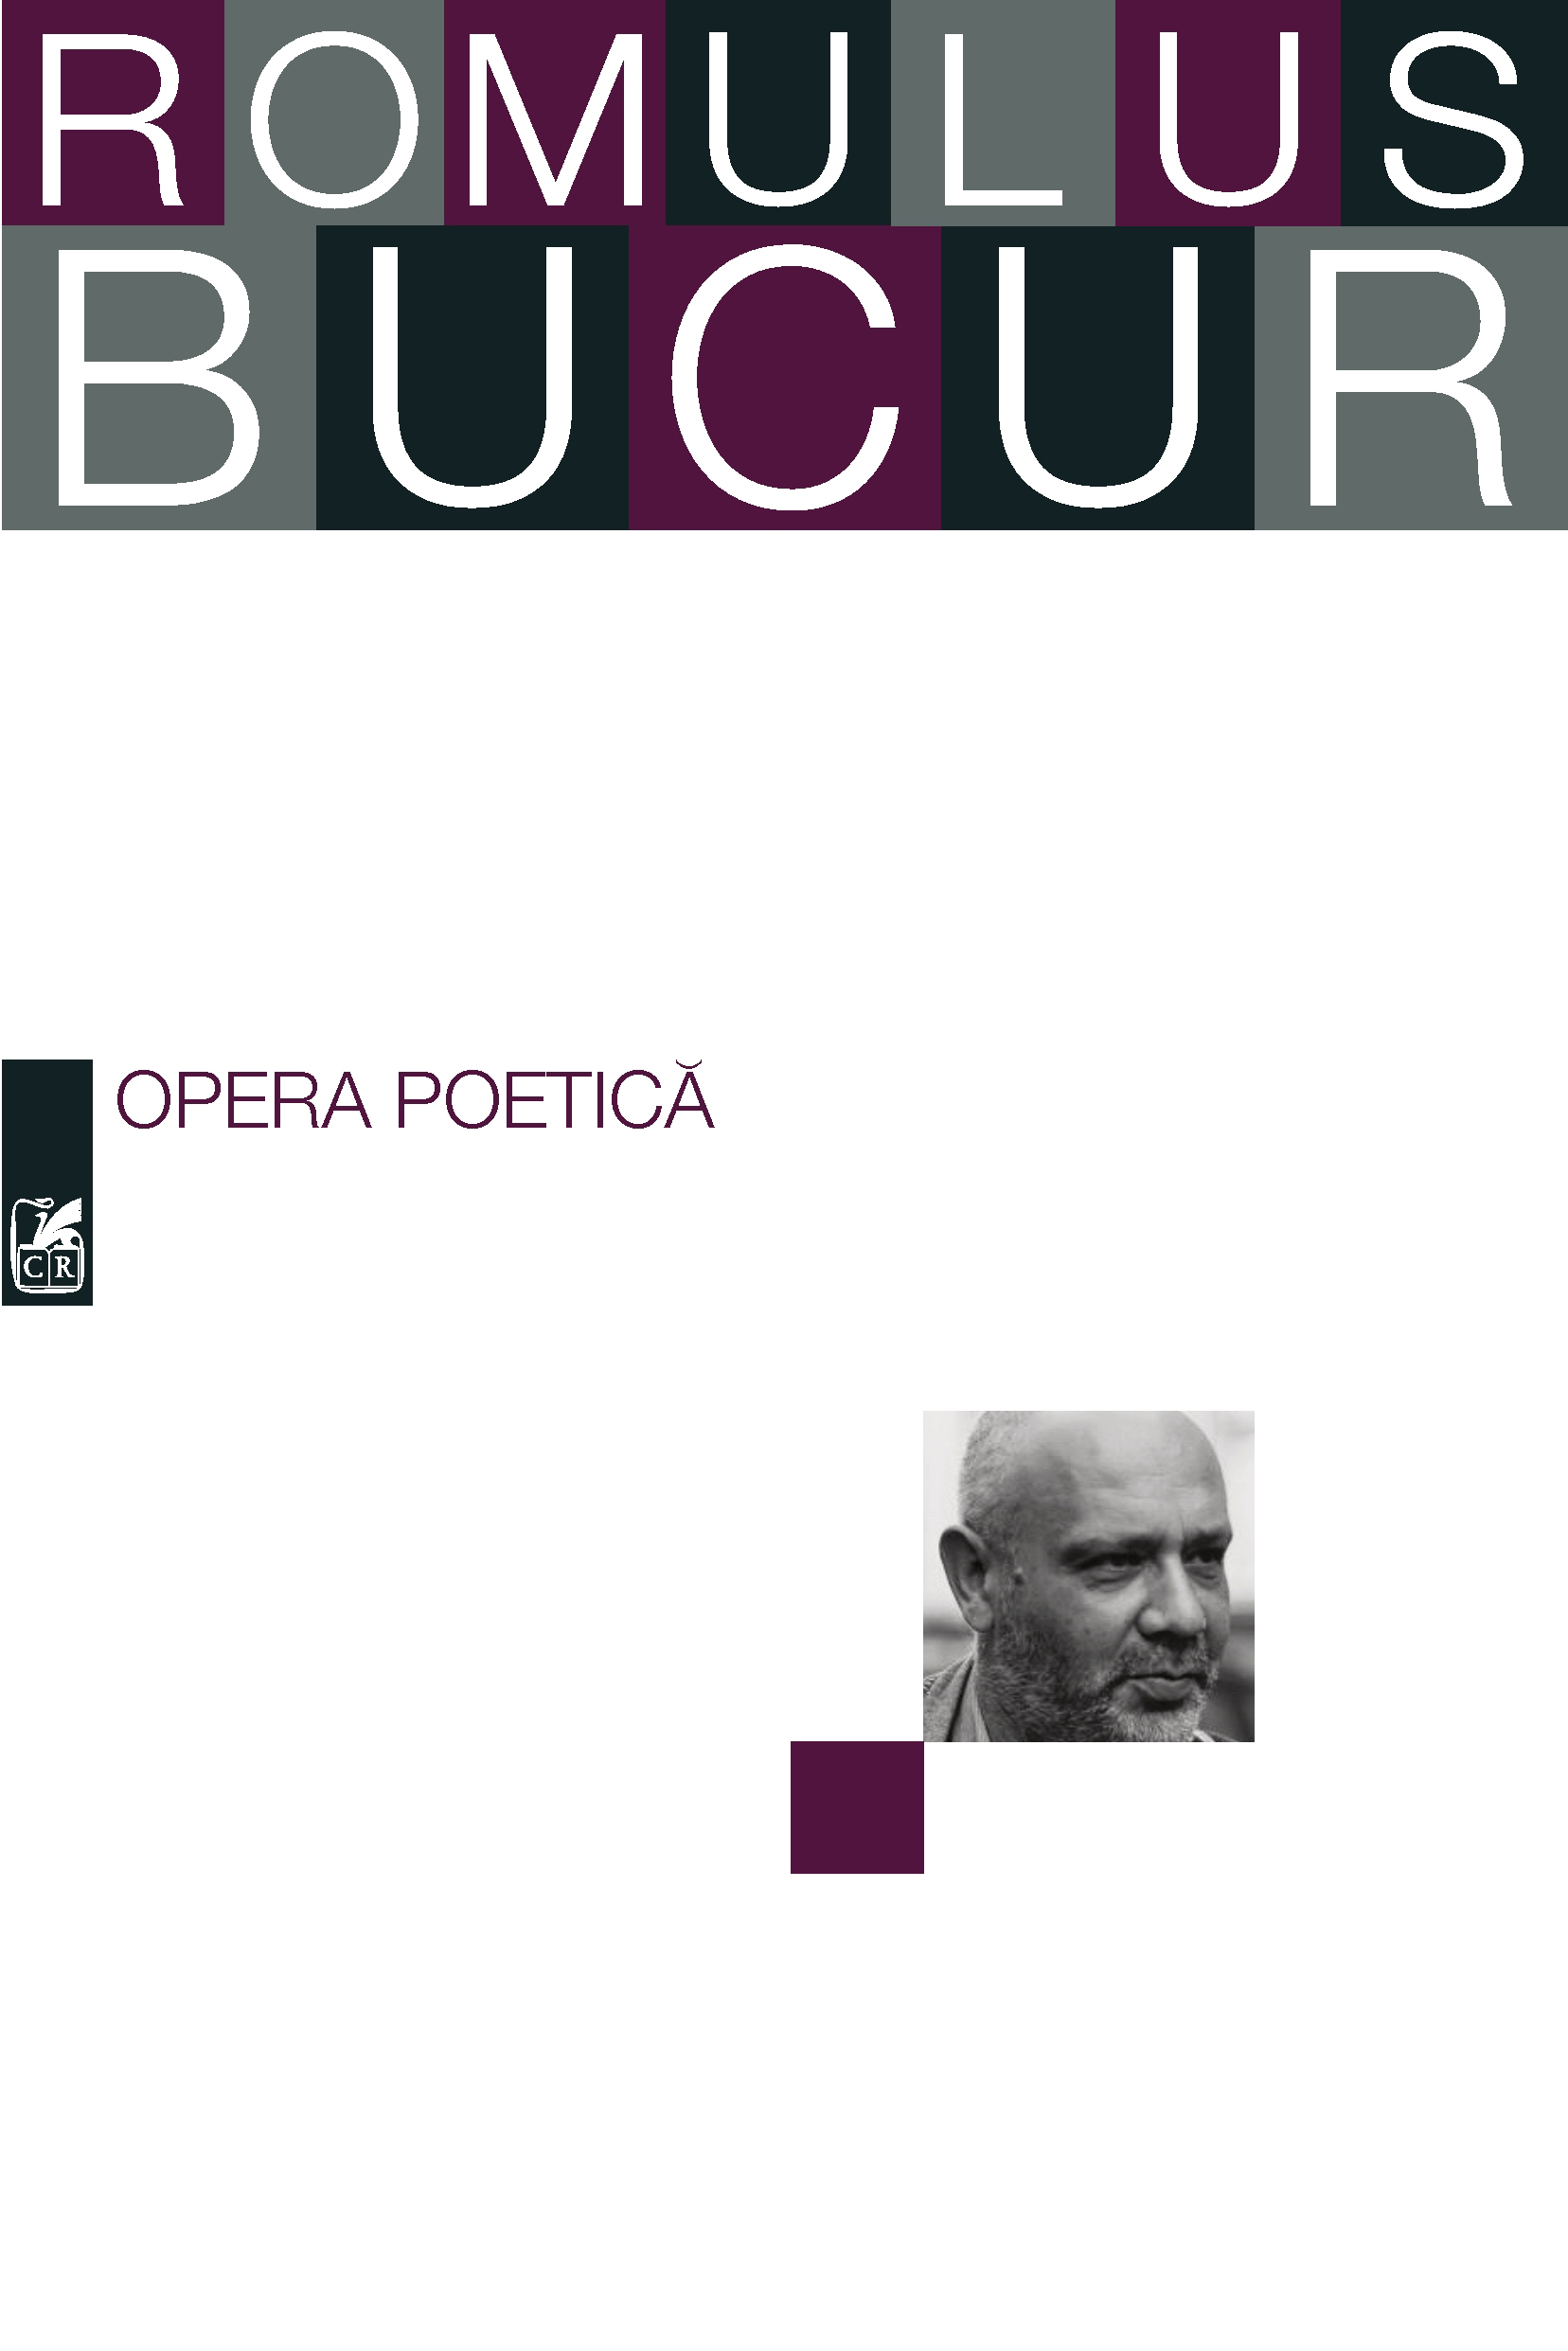 Opera poetica | Romulus Bucur Cartea Romaneasca poza bestsellers.ro